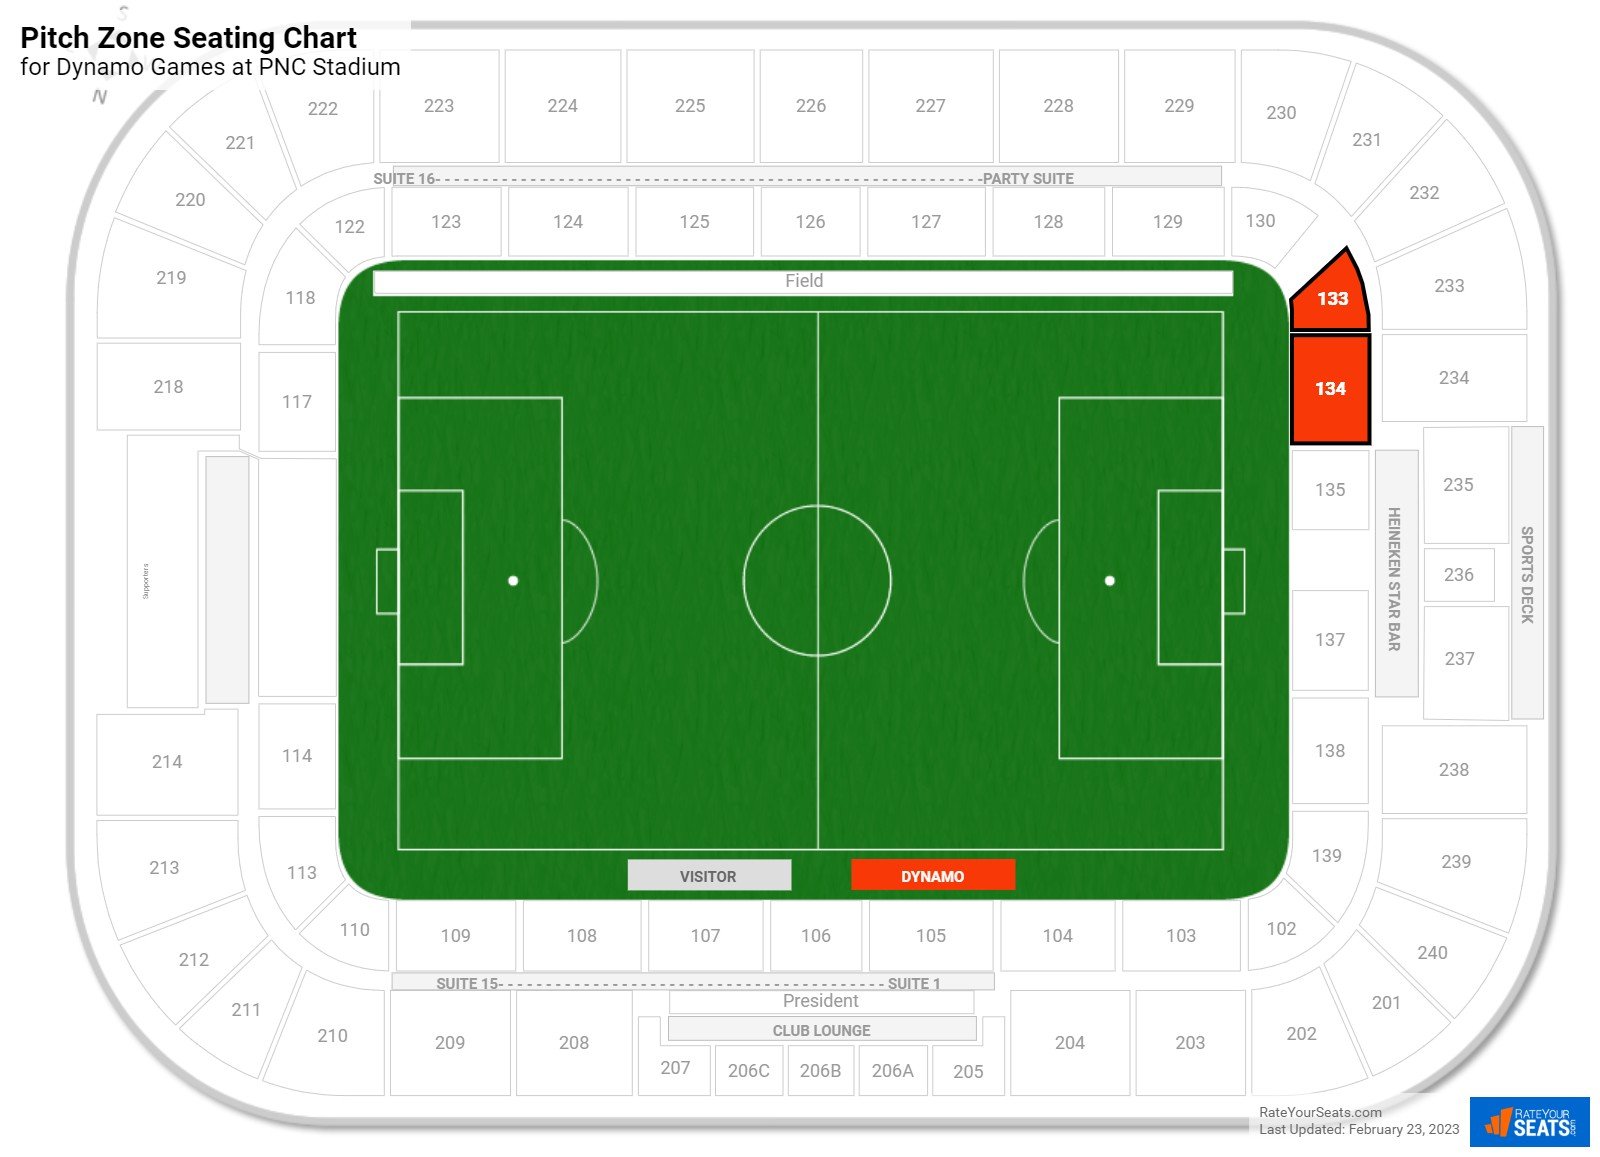 Dynamo Pitch Zone Seating Chart at PNC Stadium